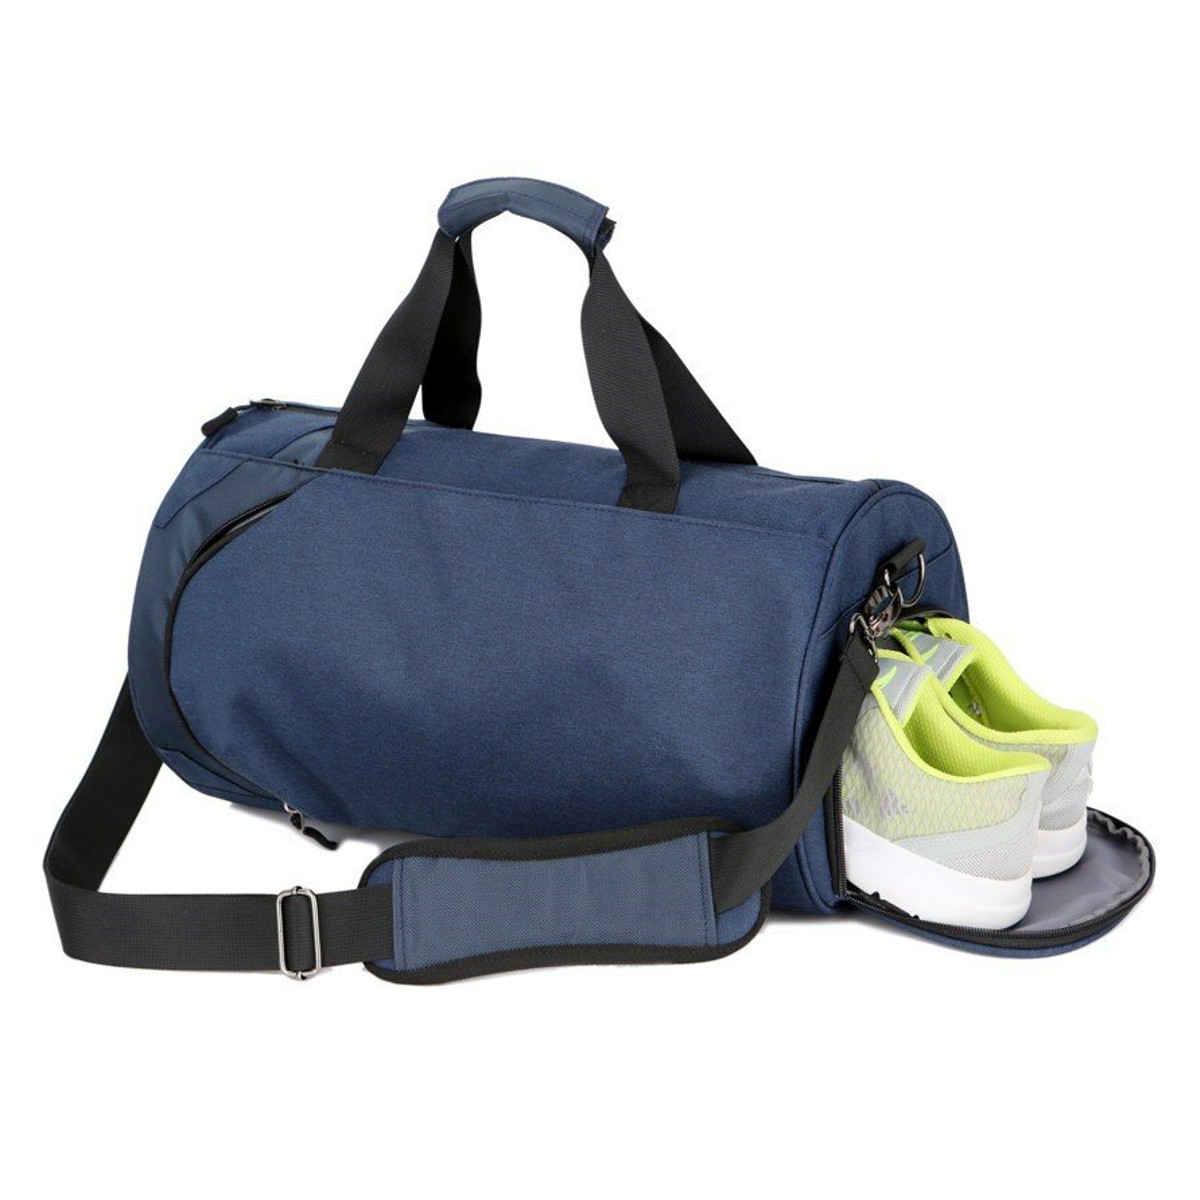 Waterproof-Multifunctional-Yoga-Bag-Outdoor-Sport-Travel-Fitness-Gym-Trainning-Handbag-Luggage-1518296-7